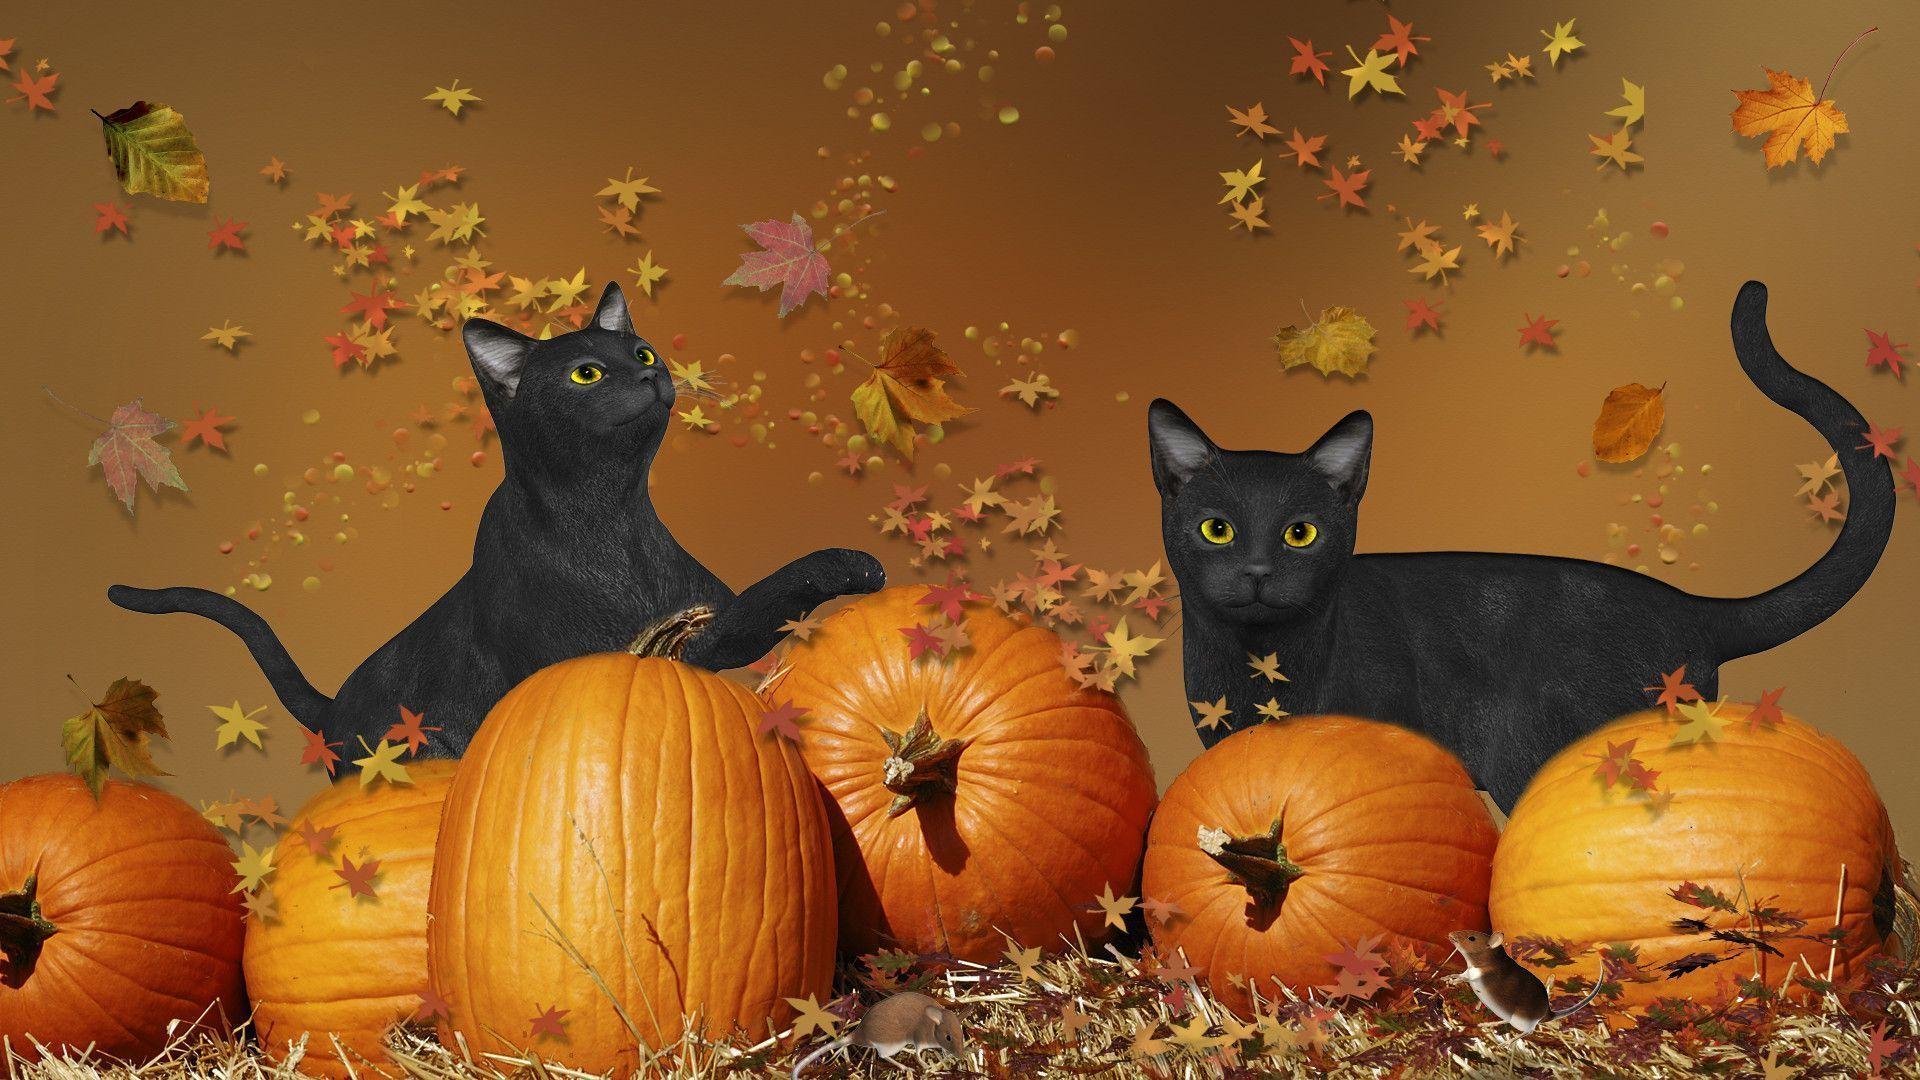 Black Kitten And Halloween Pumpkins Wallpapers - Wallpaper Cave